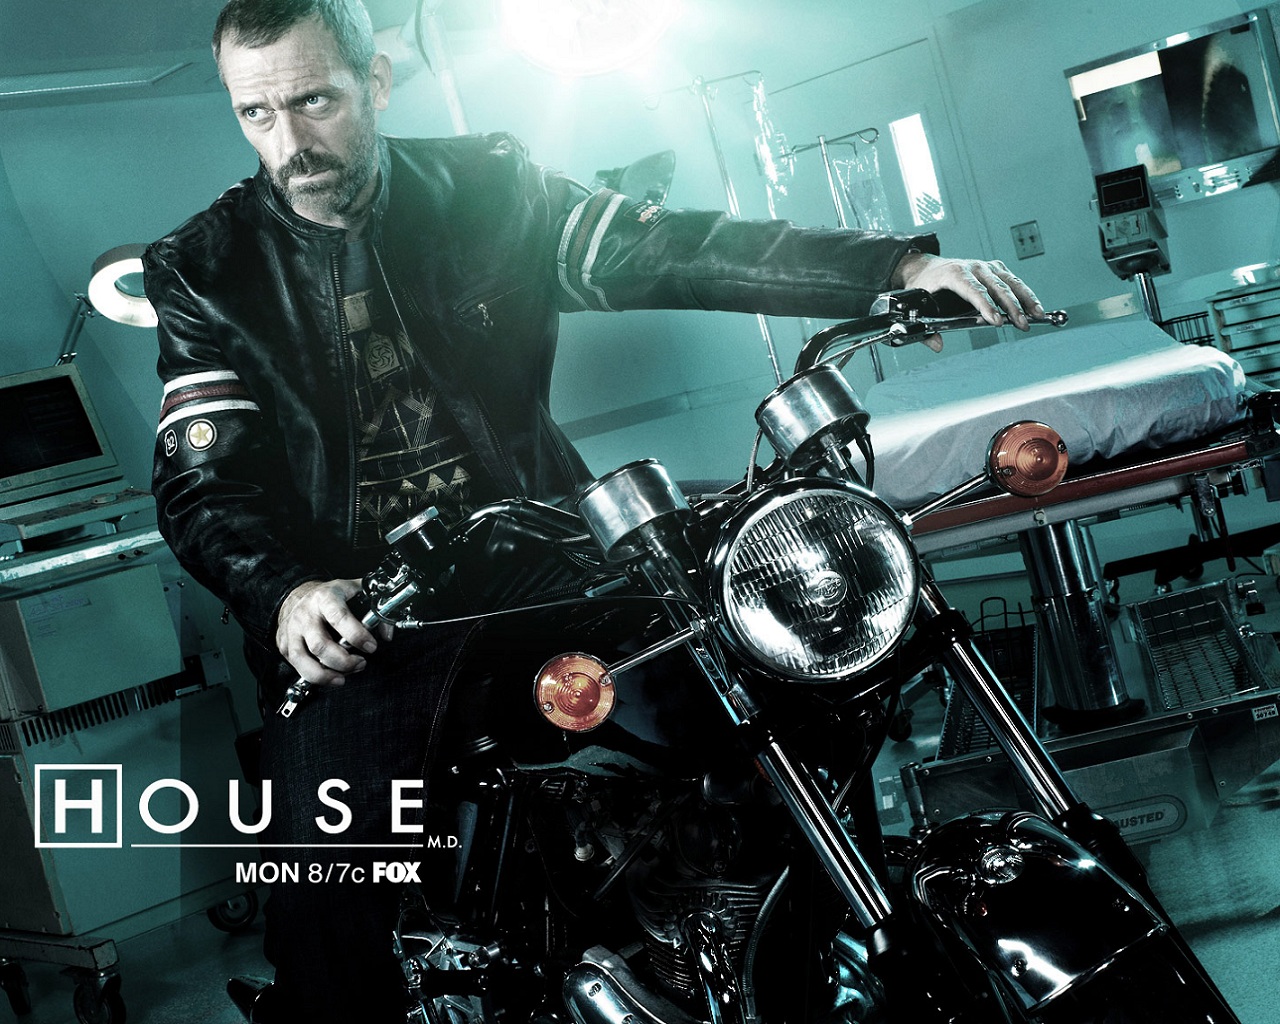 Hugh Laurie on a Motorbike